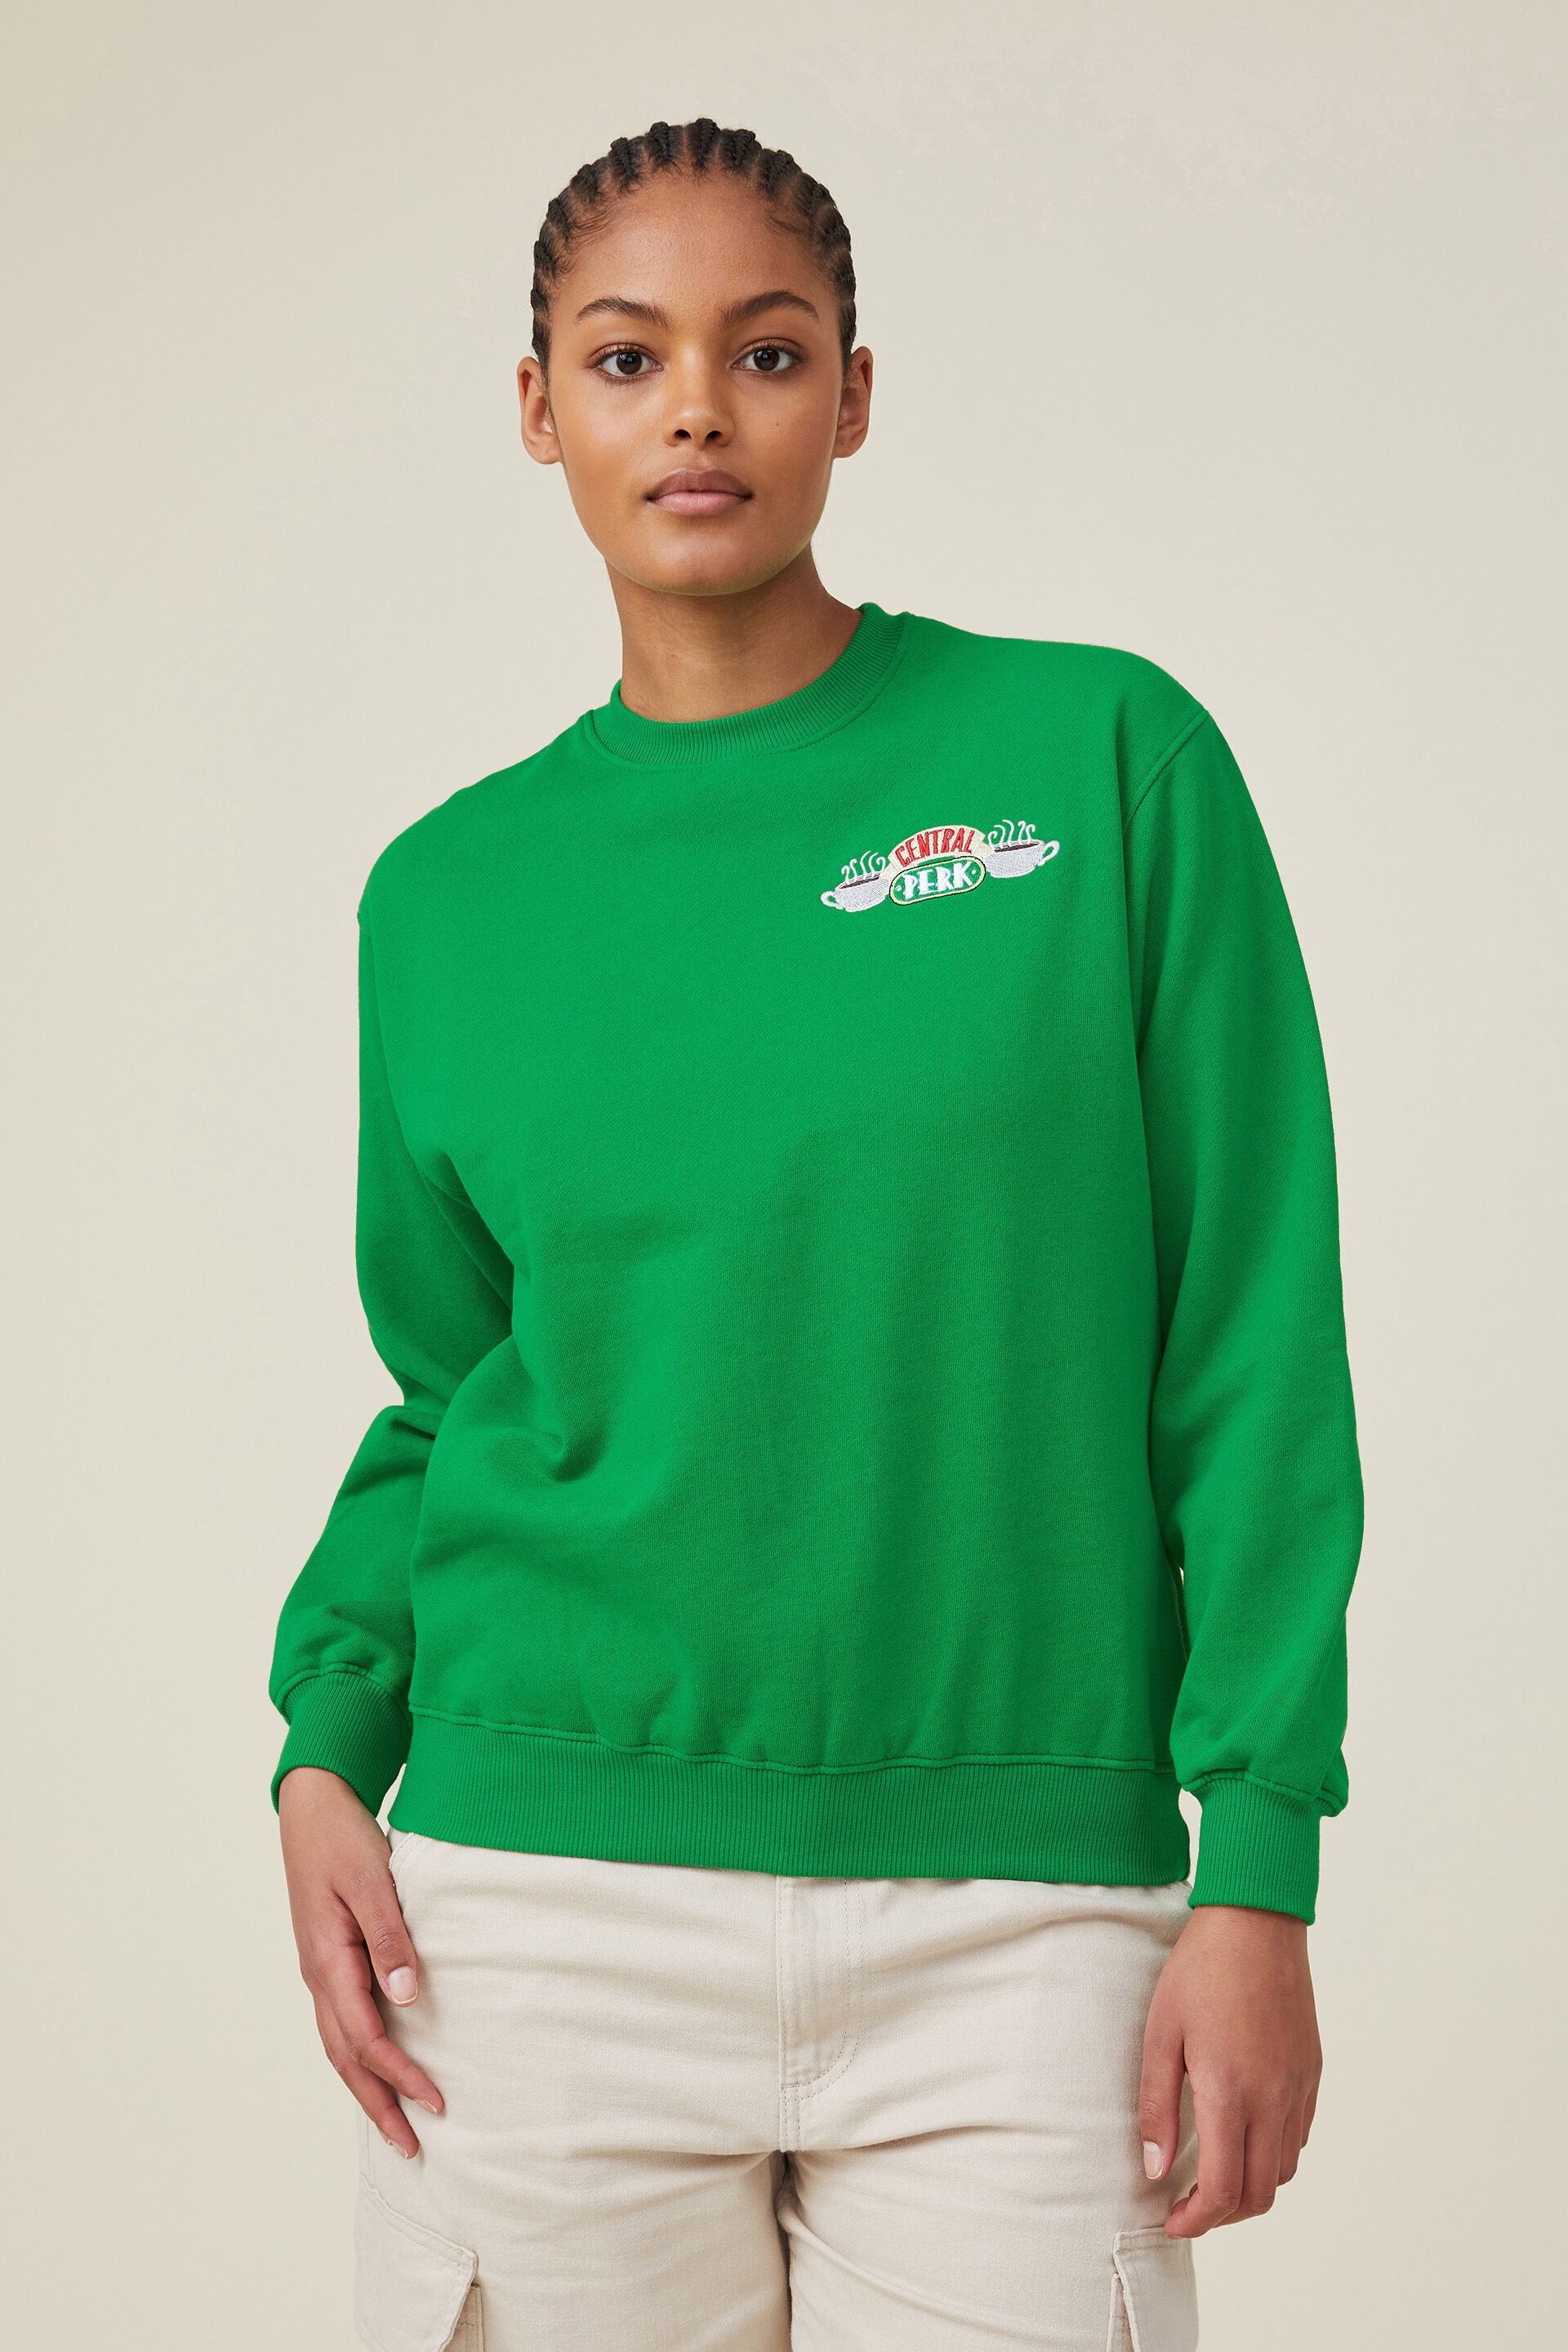 NoName jumper WOMEN FASHION Jumpers & Sweatshirts Jumper Casual Green S discount 95% 